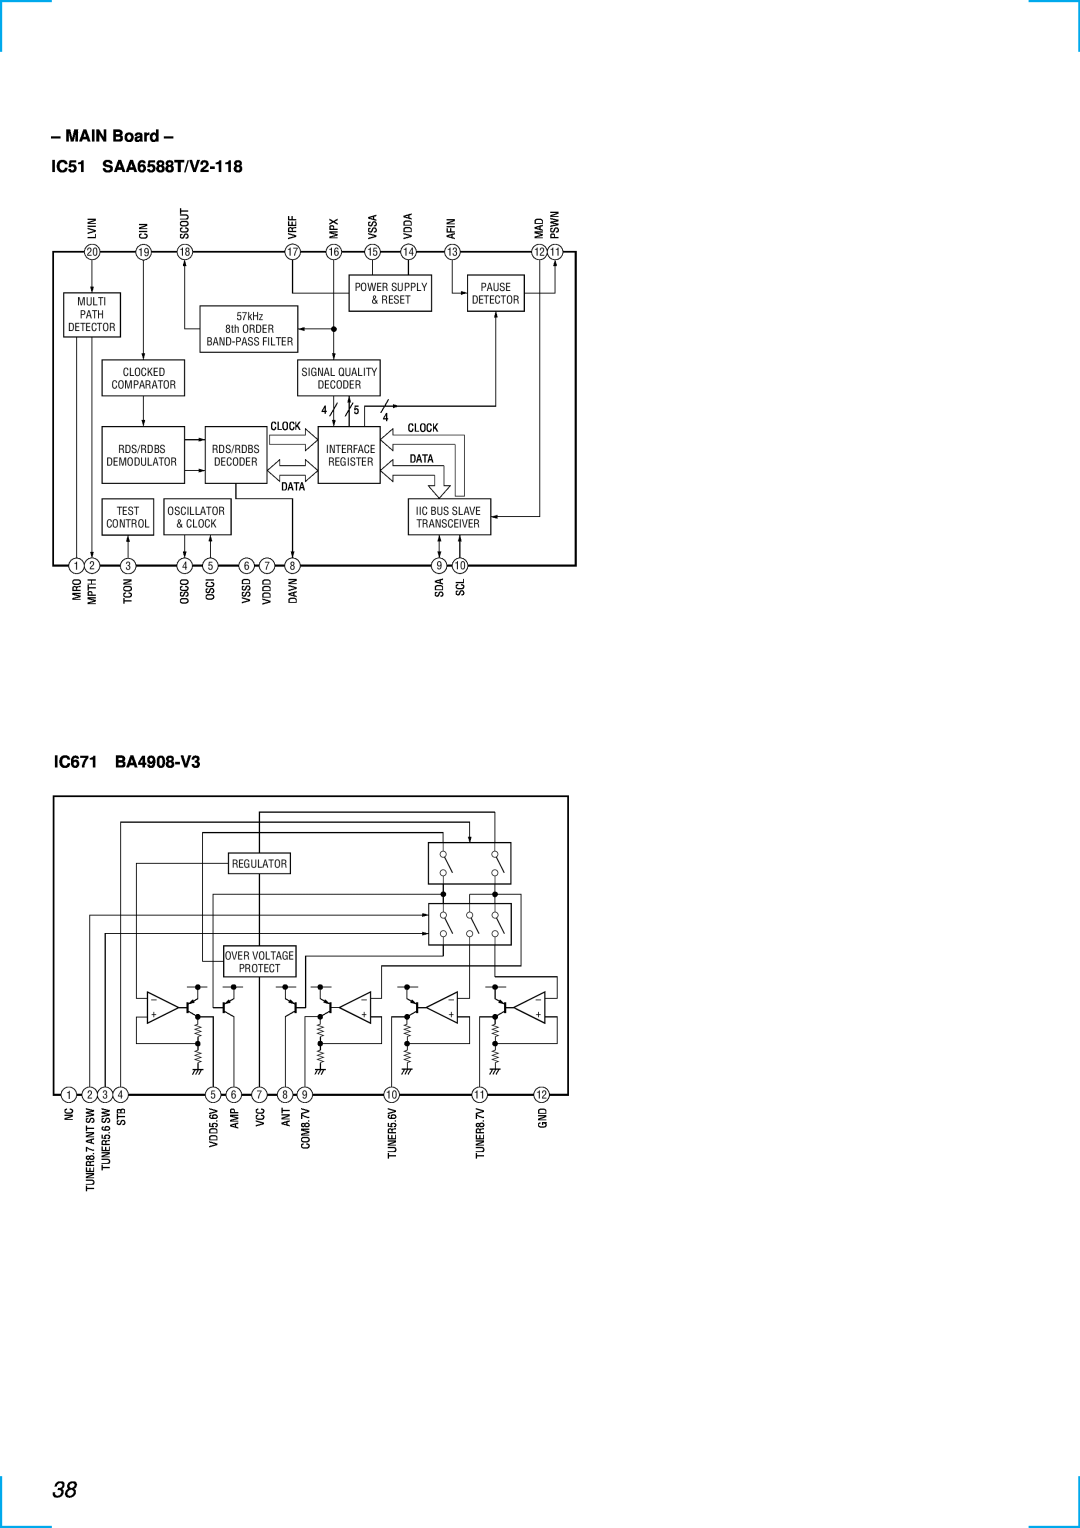 Sony MDX-C6500RV service manual IC51, SAA6588T/V2-118, IC671, BA4908-V3, MAIN Board 